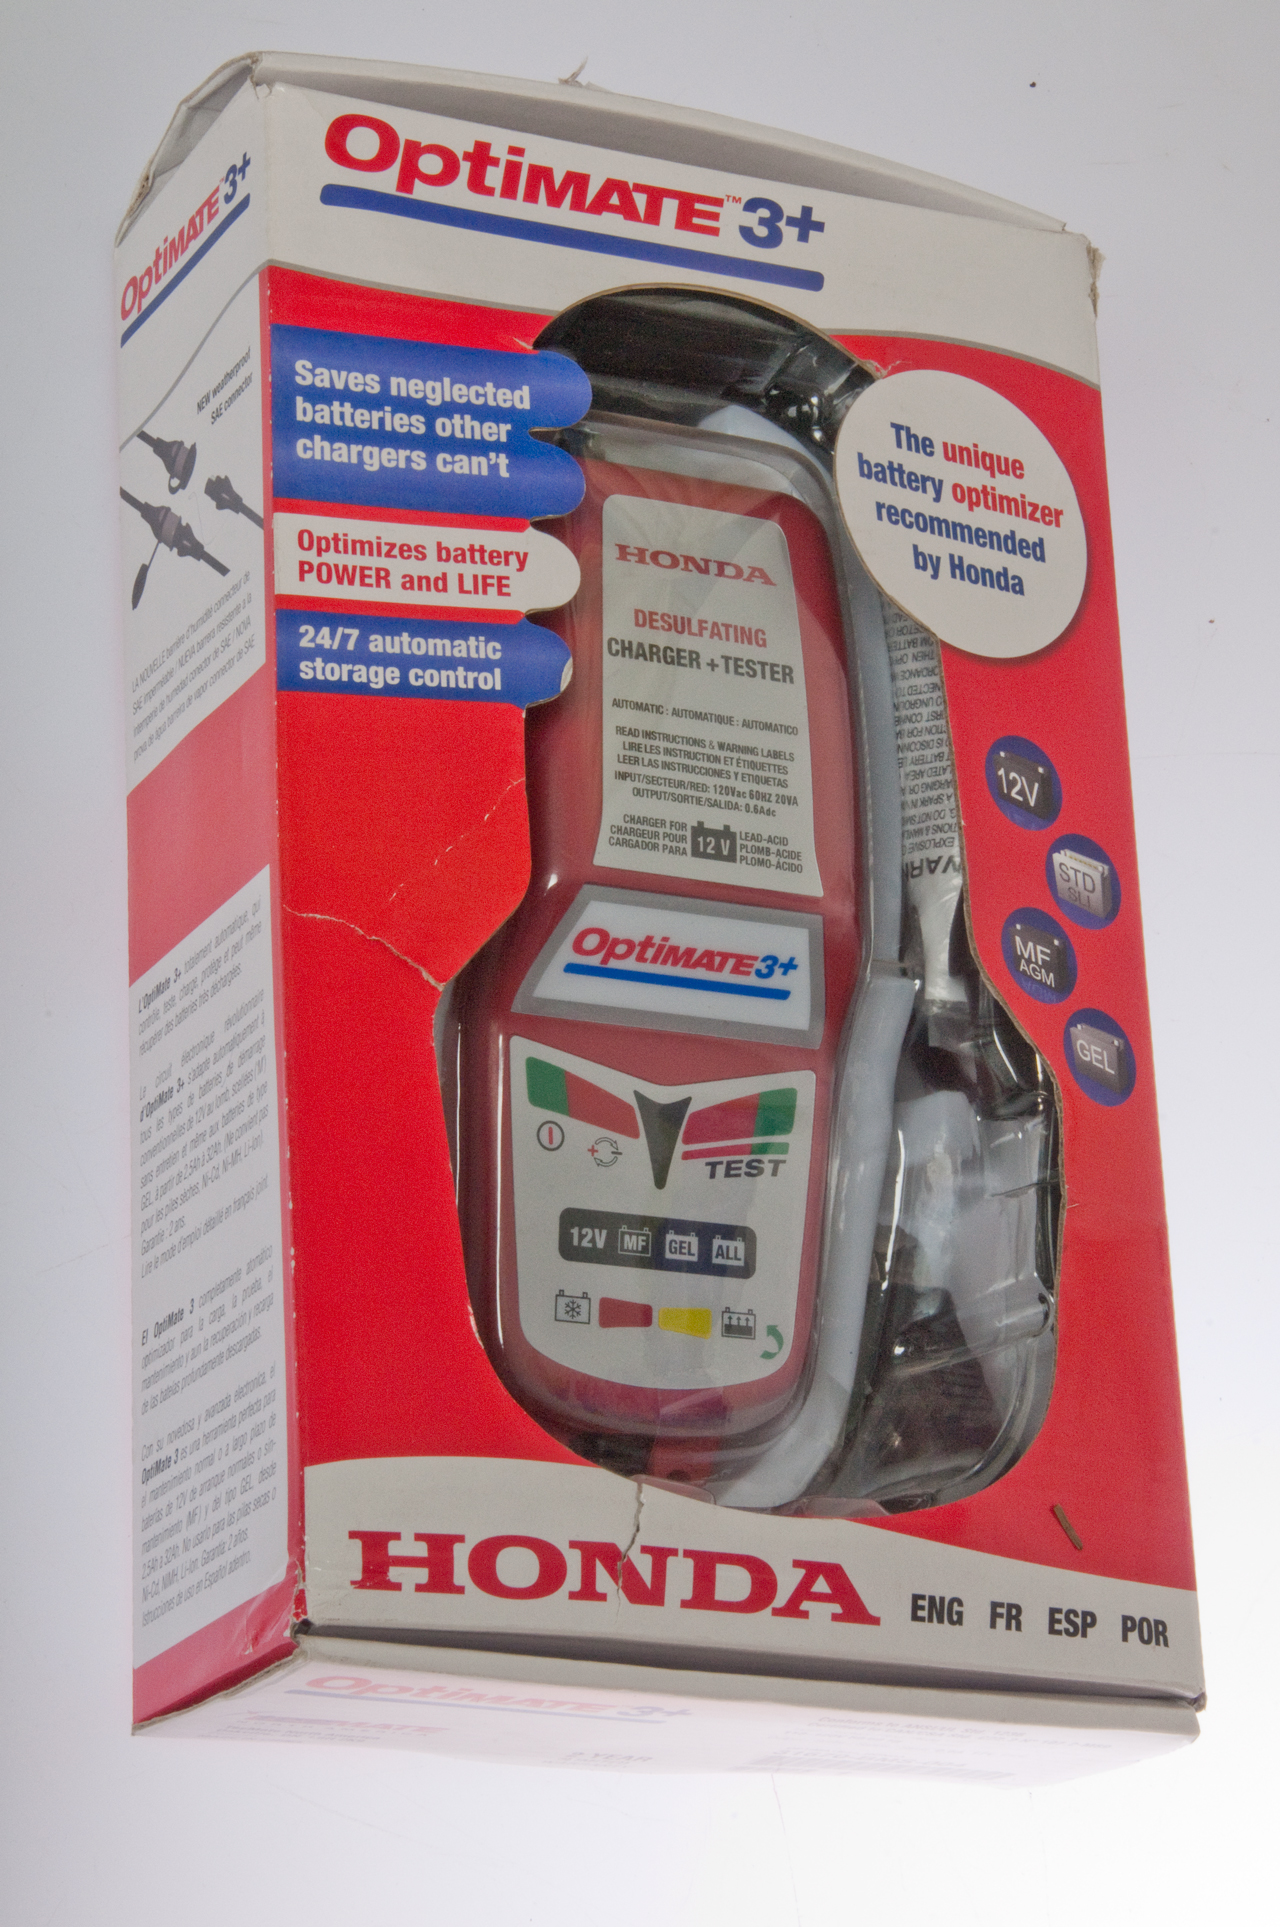 Honda optimate 3 battery charger